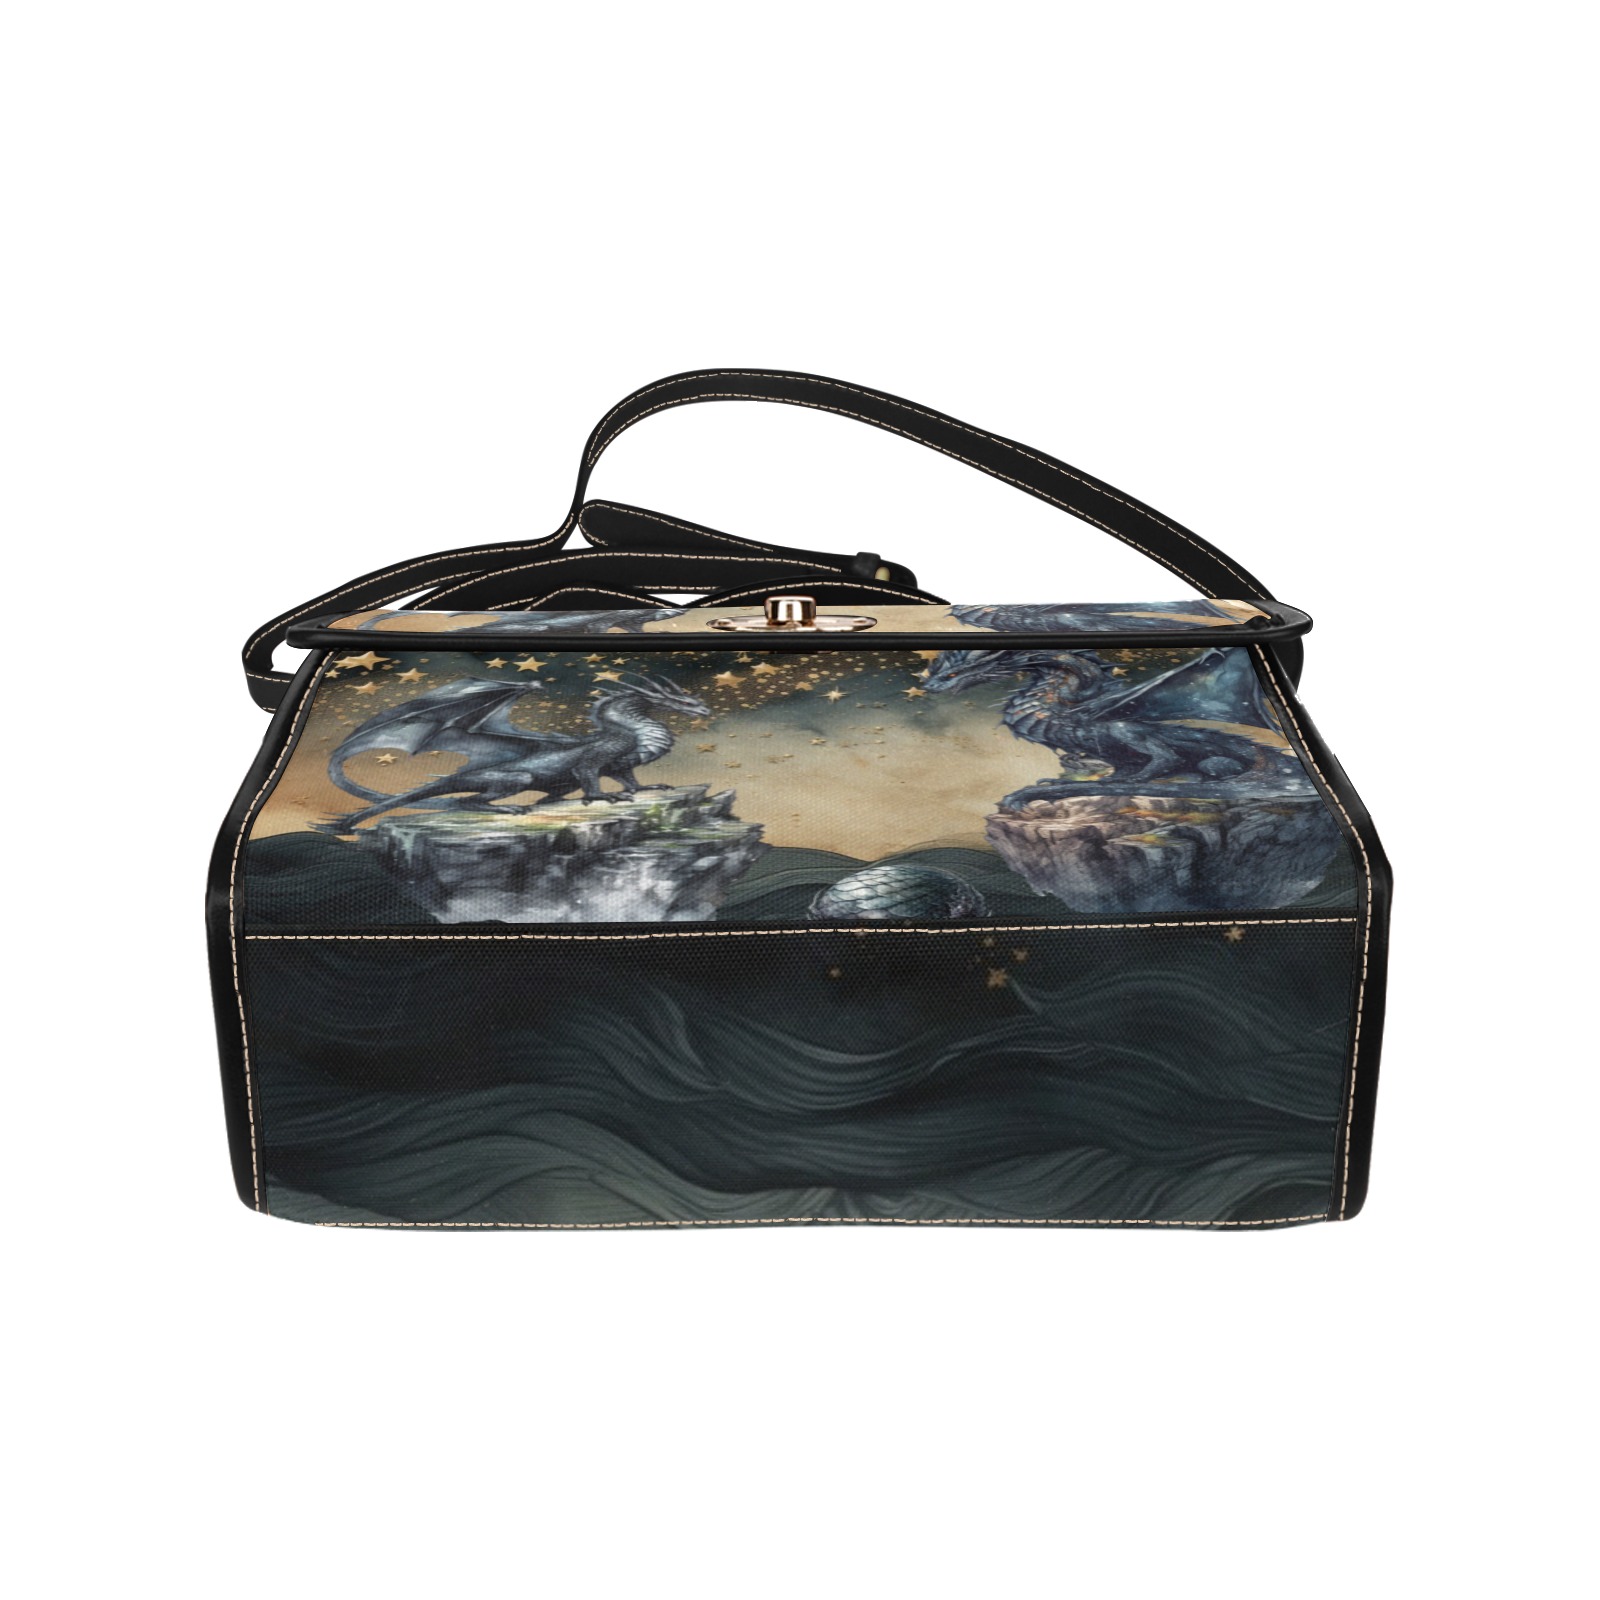 Dragons Satchel Handbag Waterproof Canvas Bag-Black (All Over Print) (Model 1641)